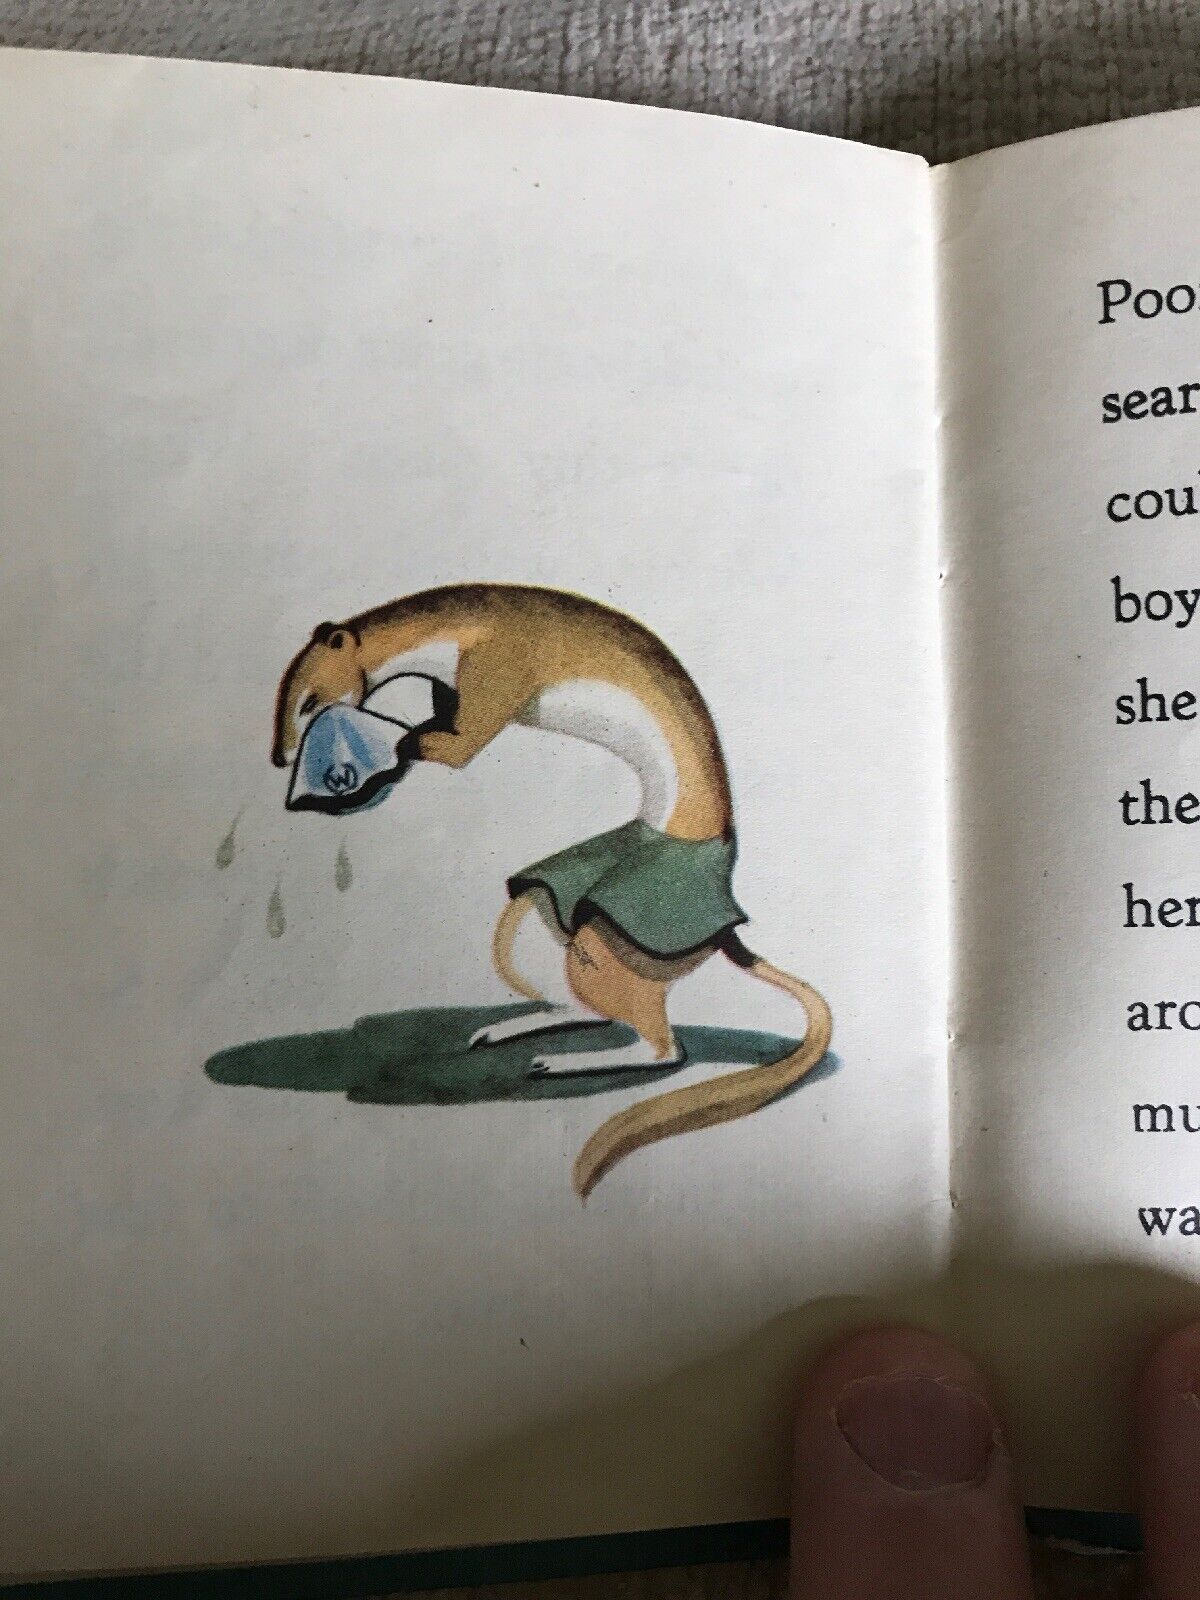 1940’s Winnie The Weasel (Peekobook) Patience Powell(Perry Colour Books) Honeyburn Books (UK)